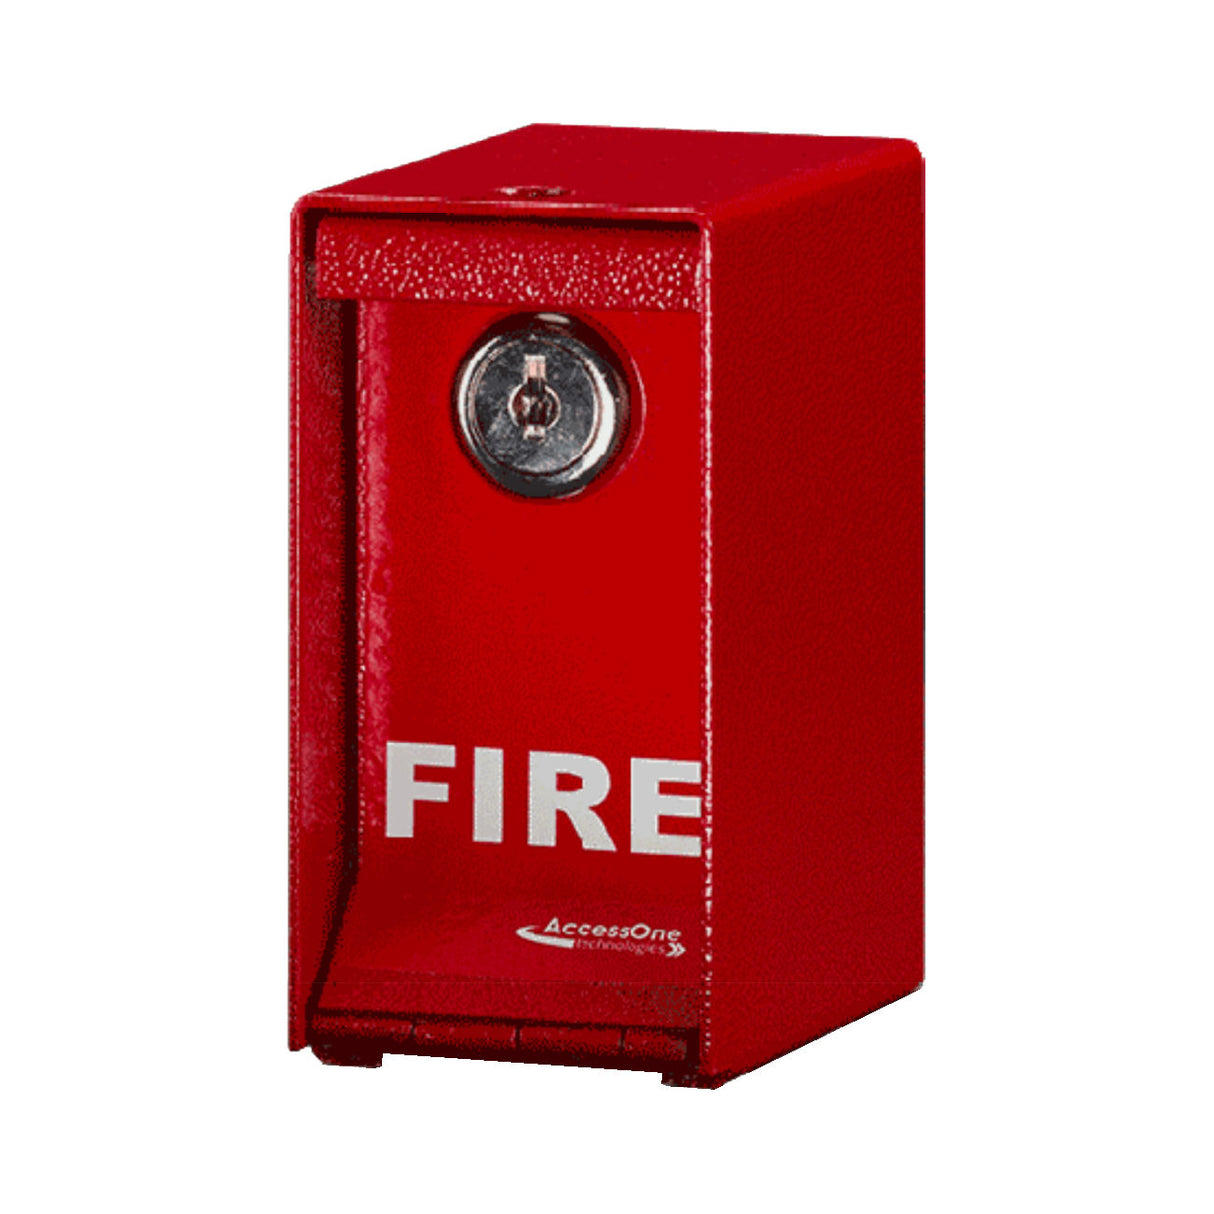 Access One FLB100-Mini Fire Box Ready for Padlock